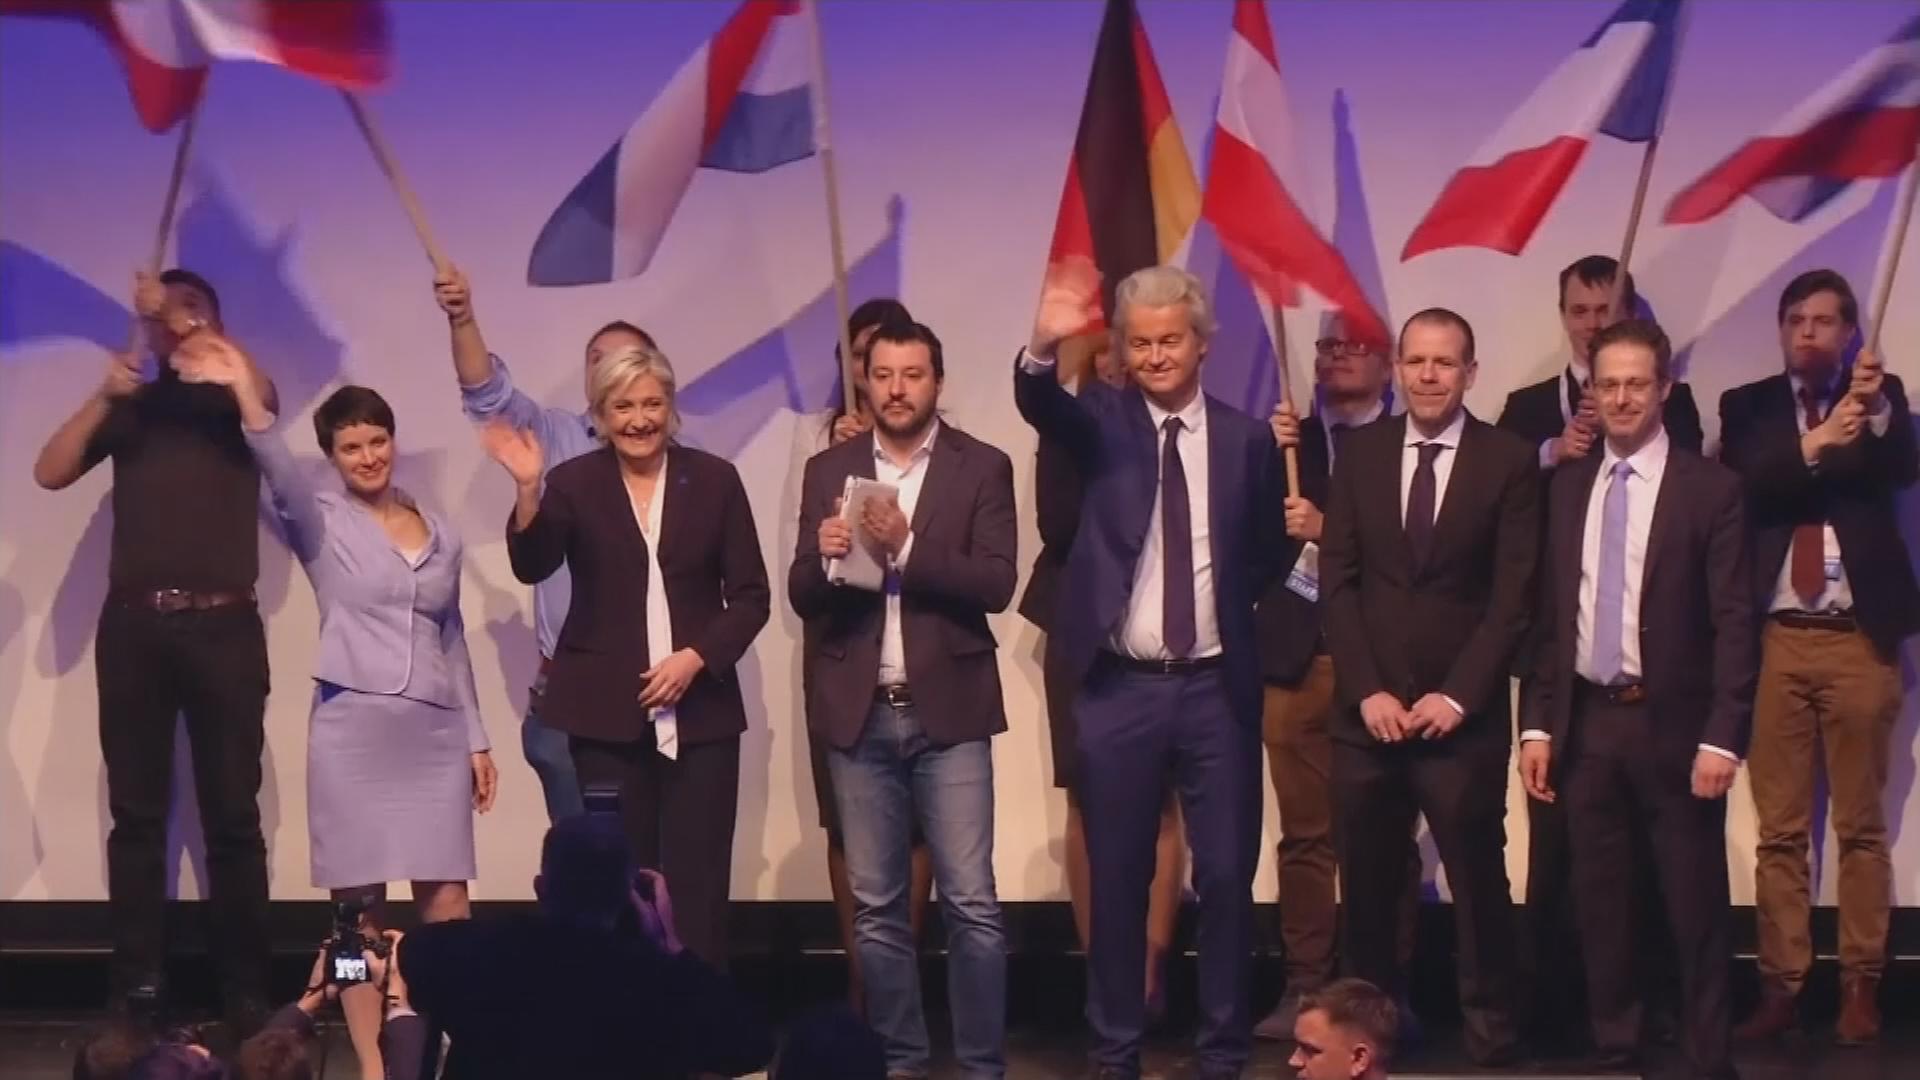 Le Pen will Abstand von AfD im EU-Parlament